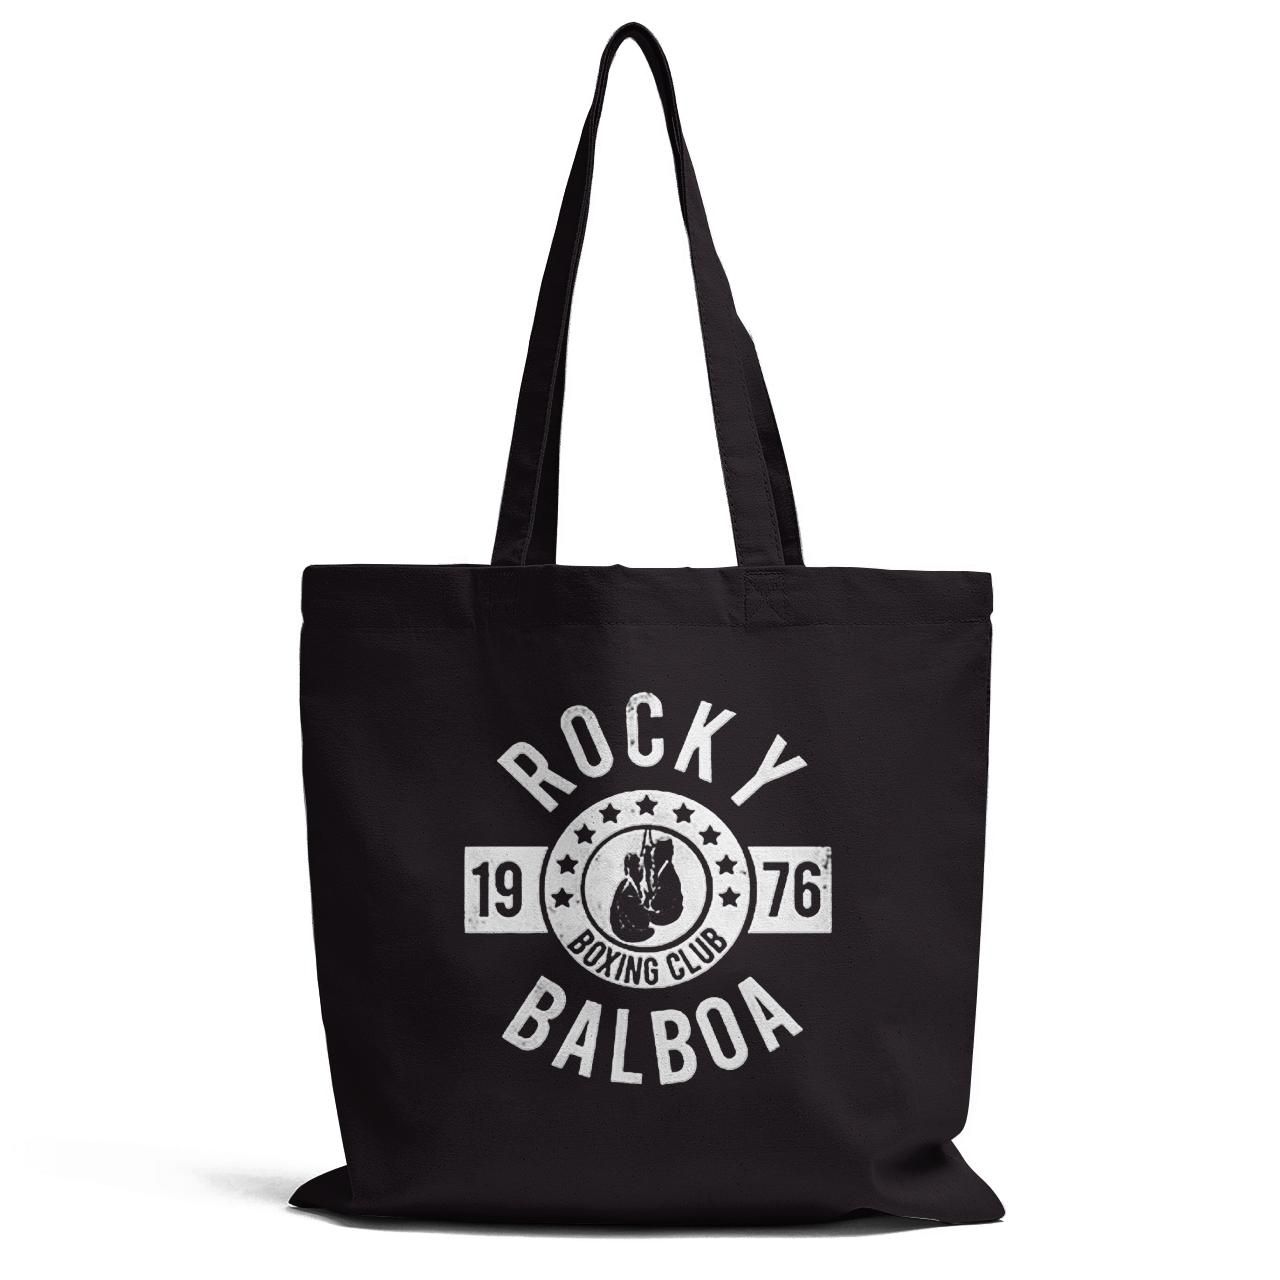 Rock Y 1976 Balboa Boxing Club Tote Bag